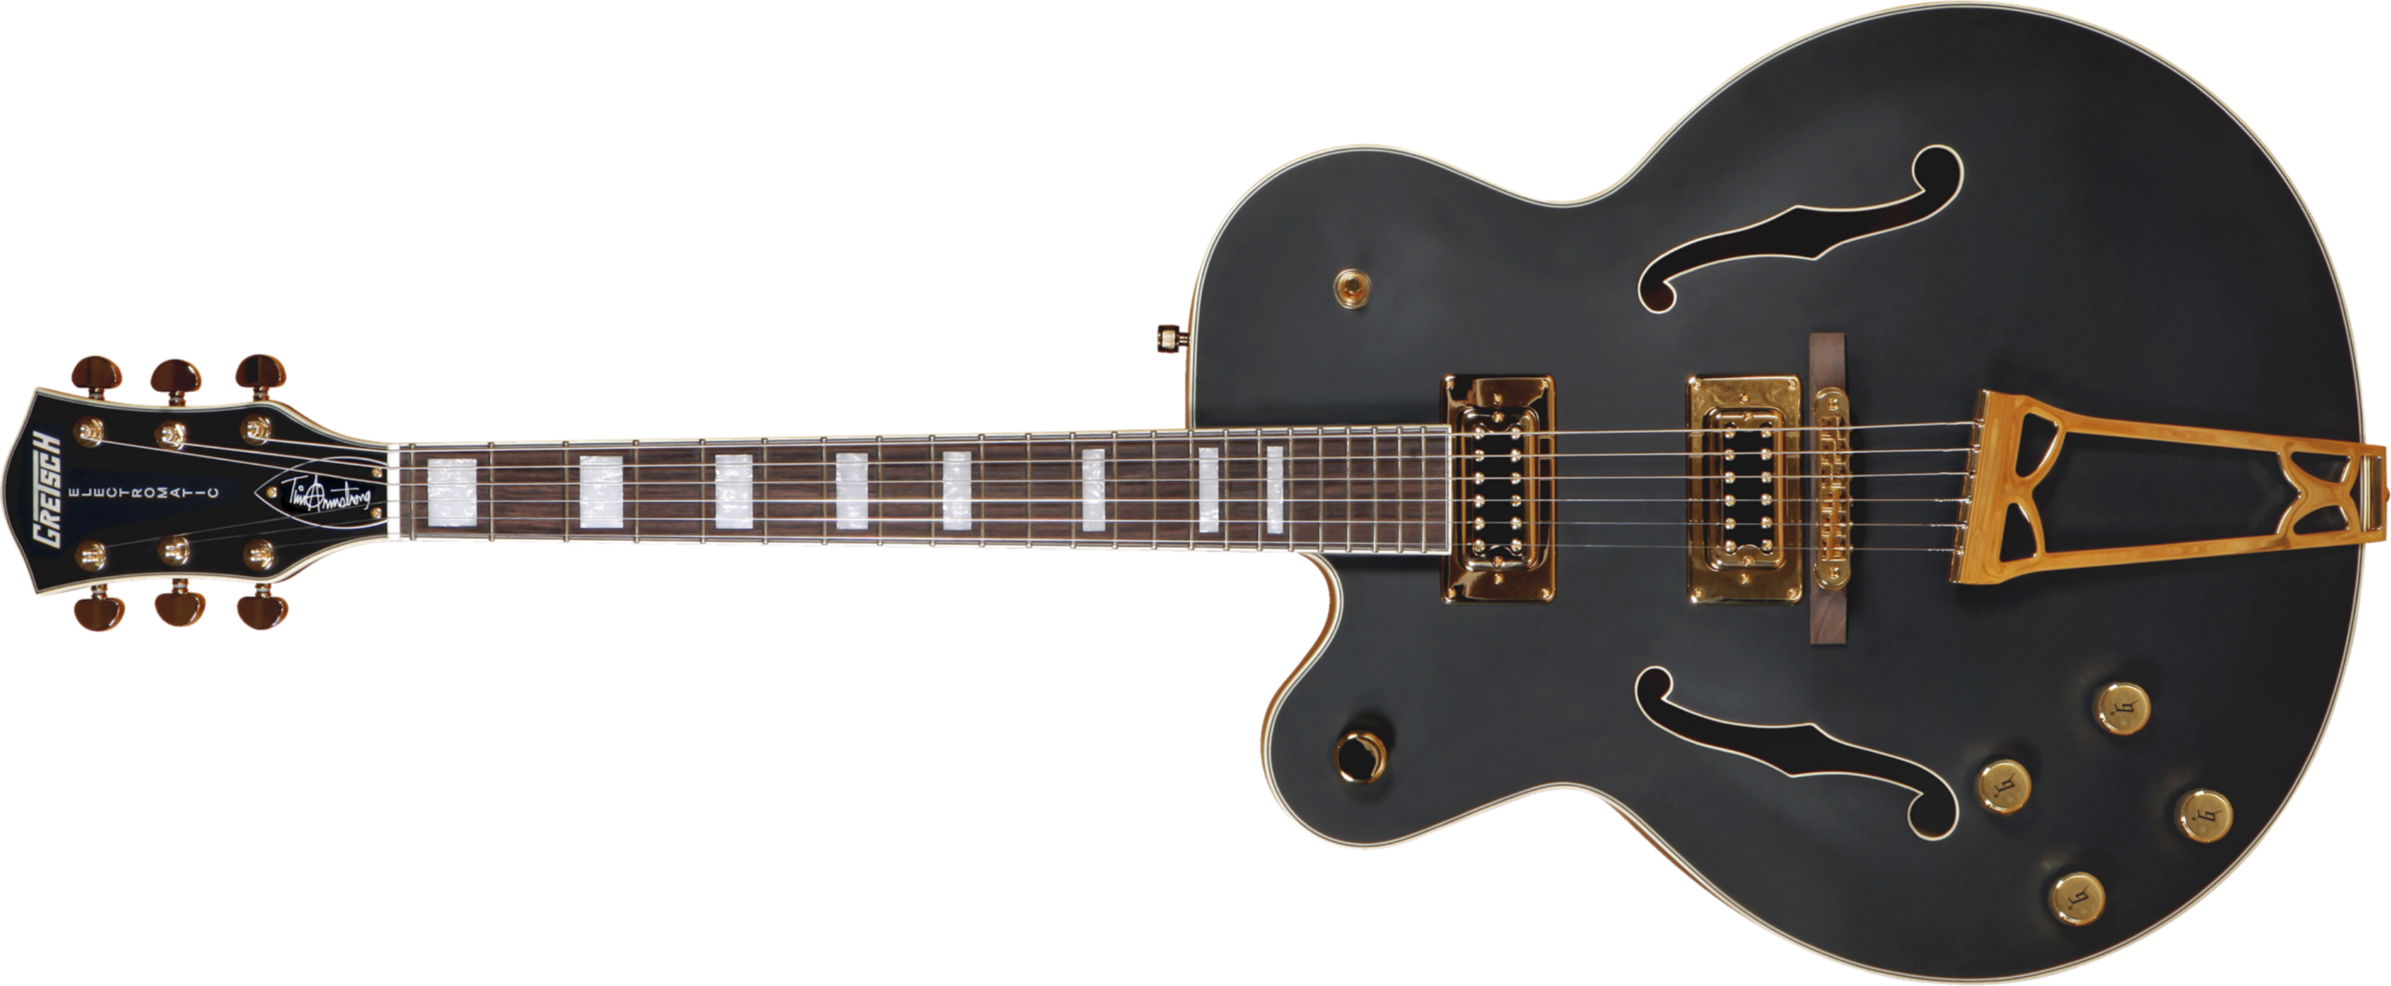 Gretsch Tim Armstrong G5191bk Electromatic Hollow Body Left-handed - Black Matte - Linkshandige elektrische gitaar - Main picture